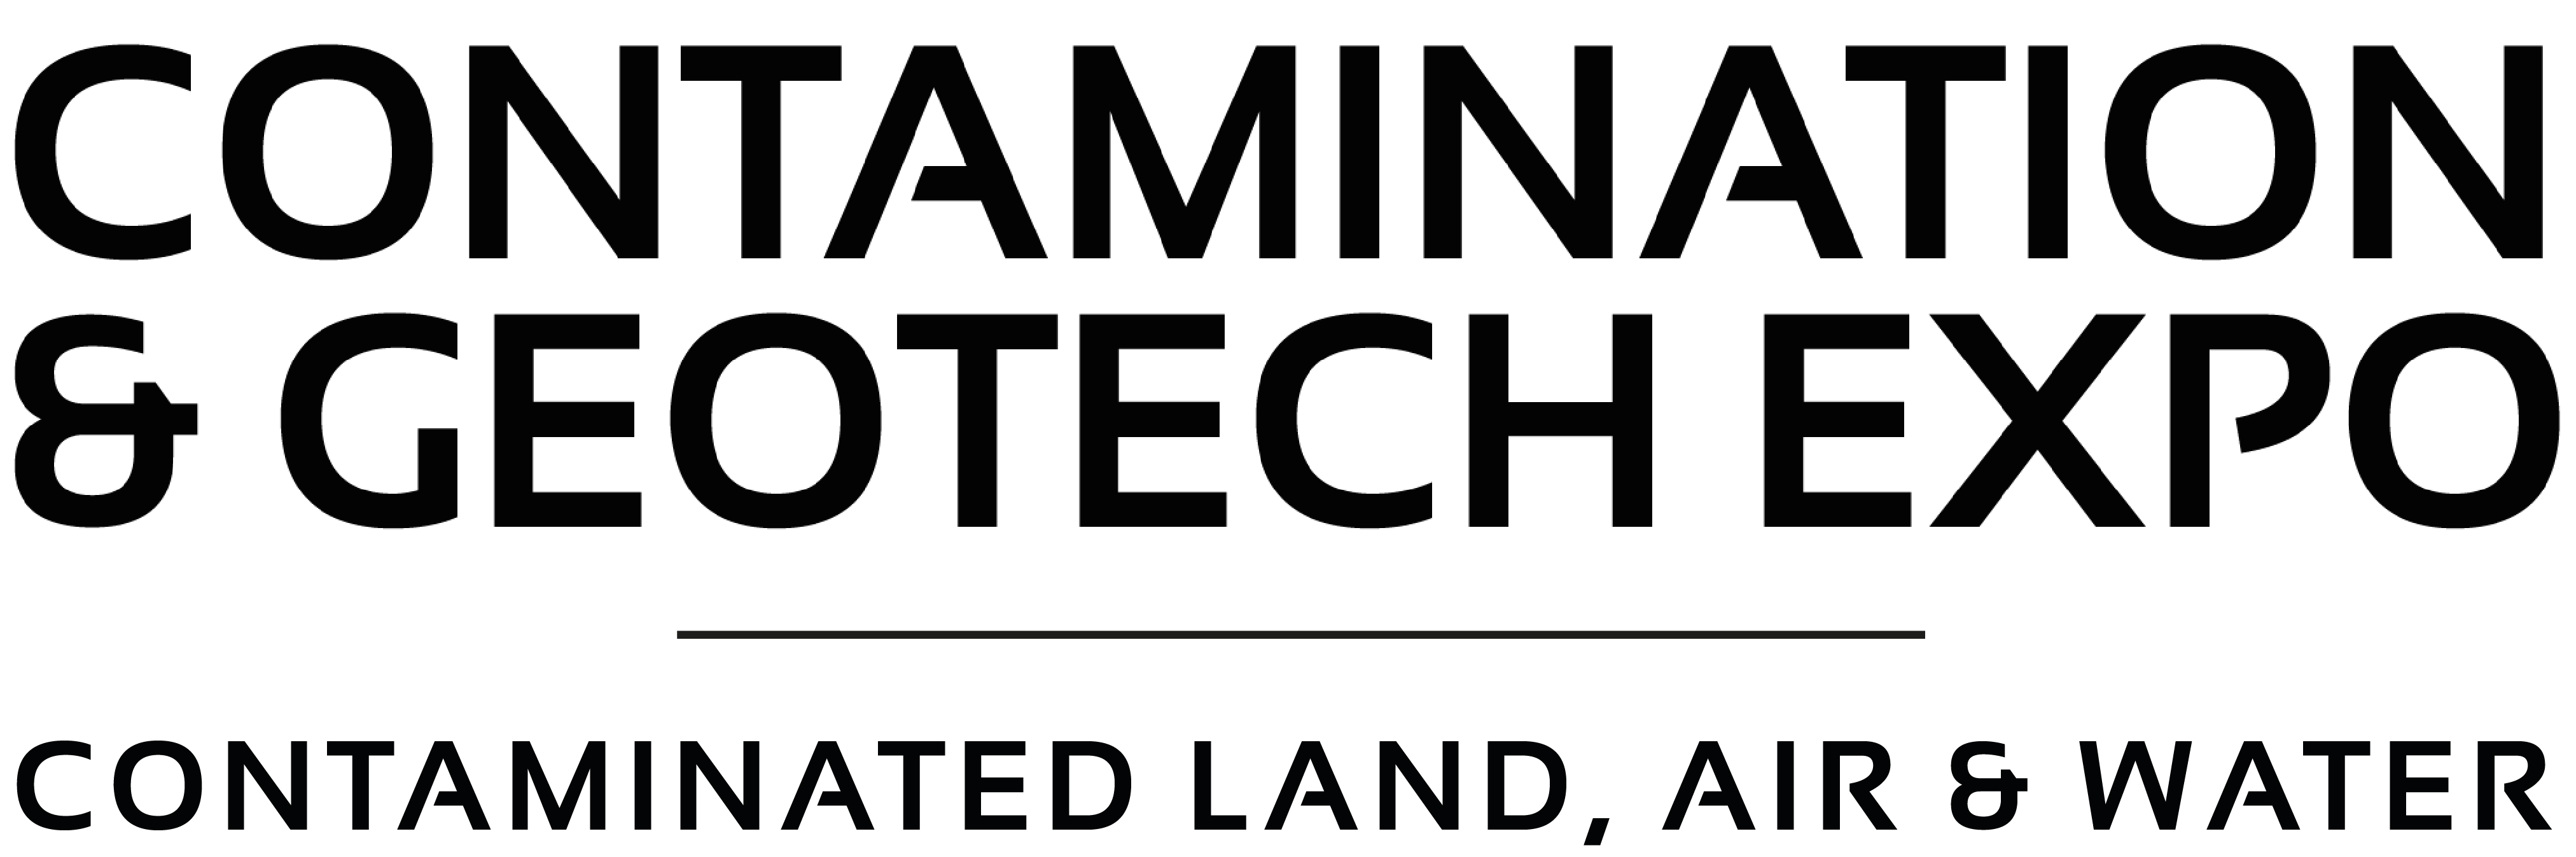 Contamination & Geotech Expo logo